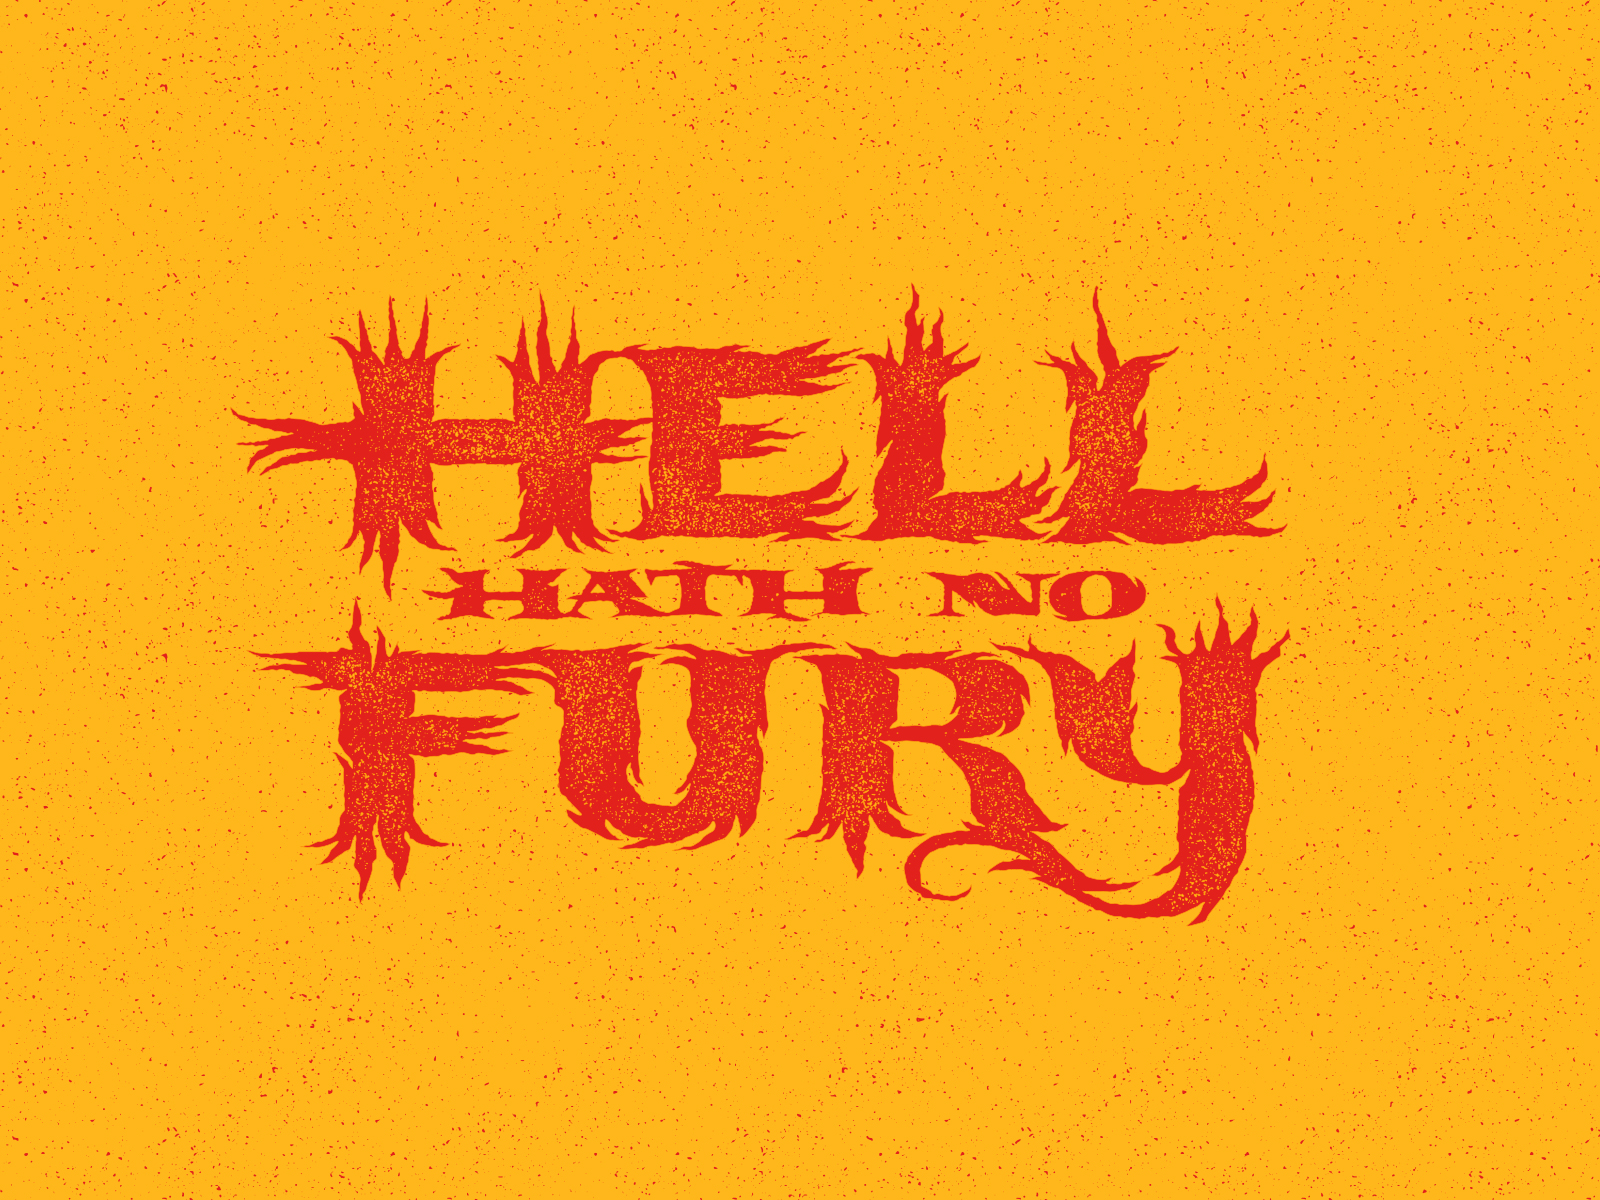 Hell hath no fury like 666 and a half. : r/DankMemesFromSite19